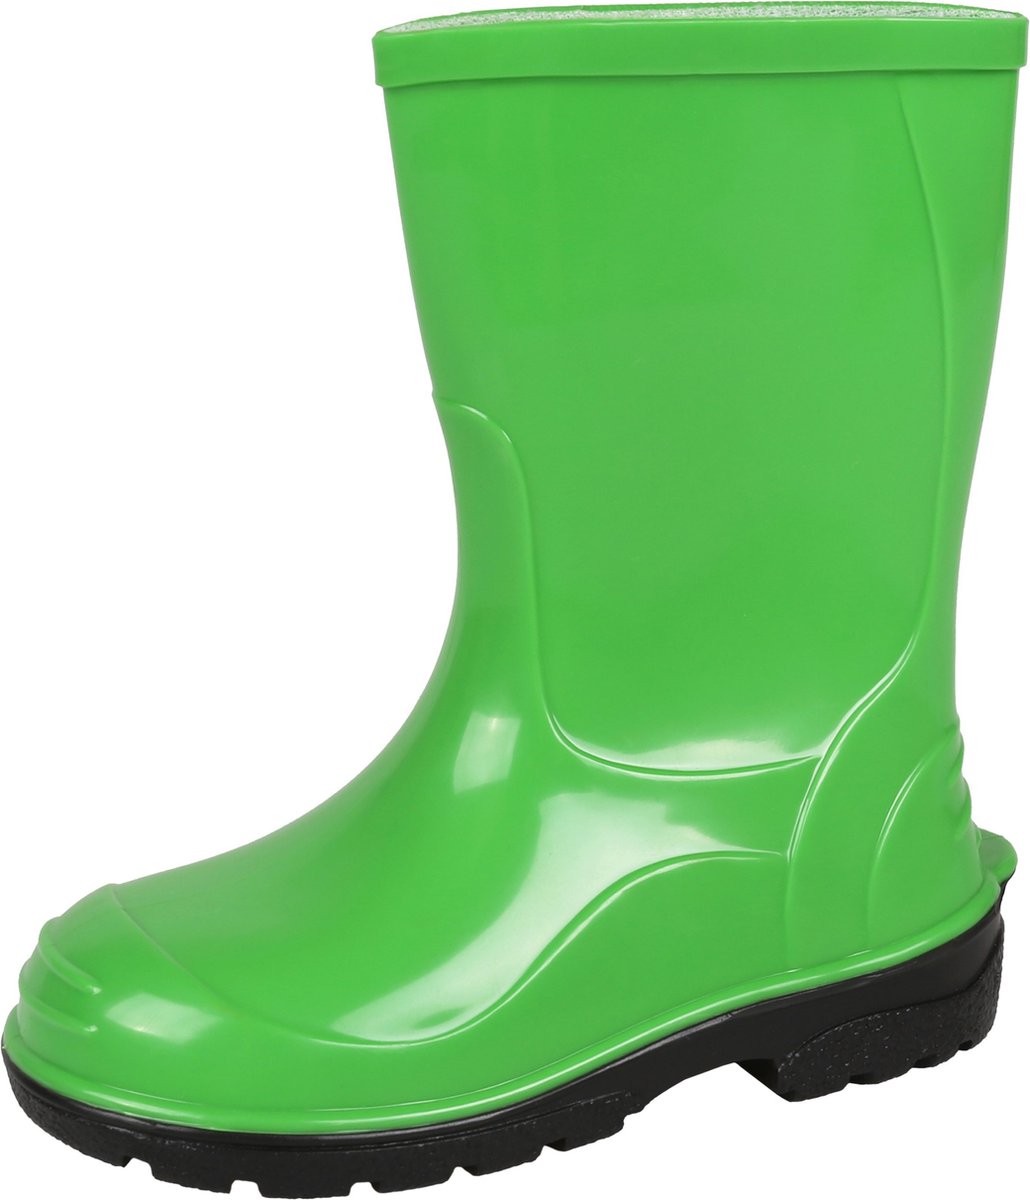 Groene laarzen van PVC materiaal, met antislipzool - OLI LEMIGO / 23